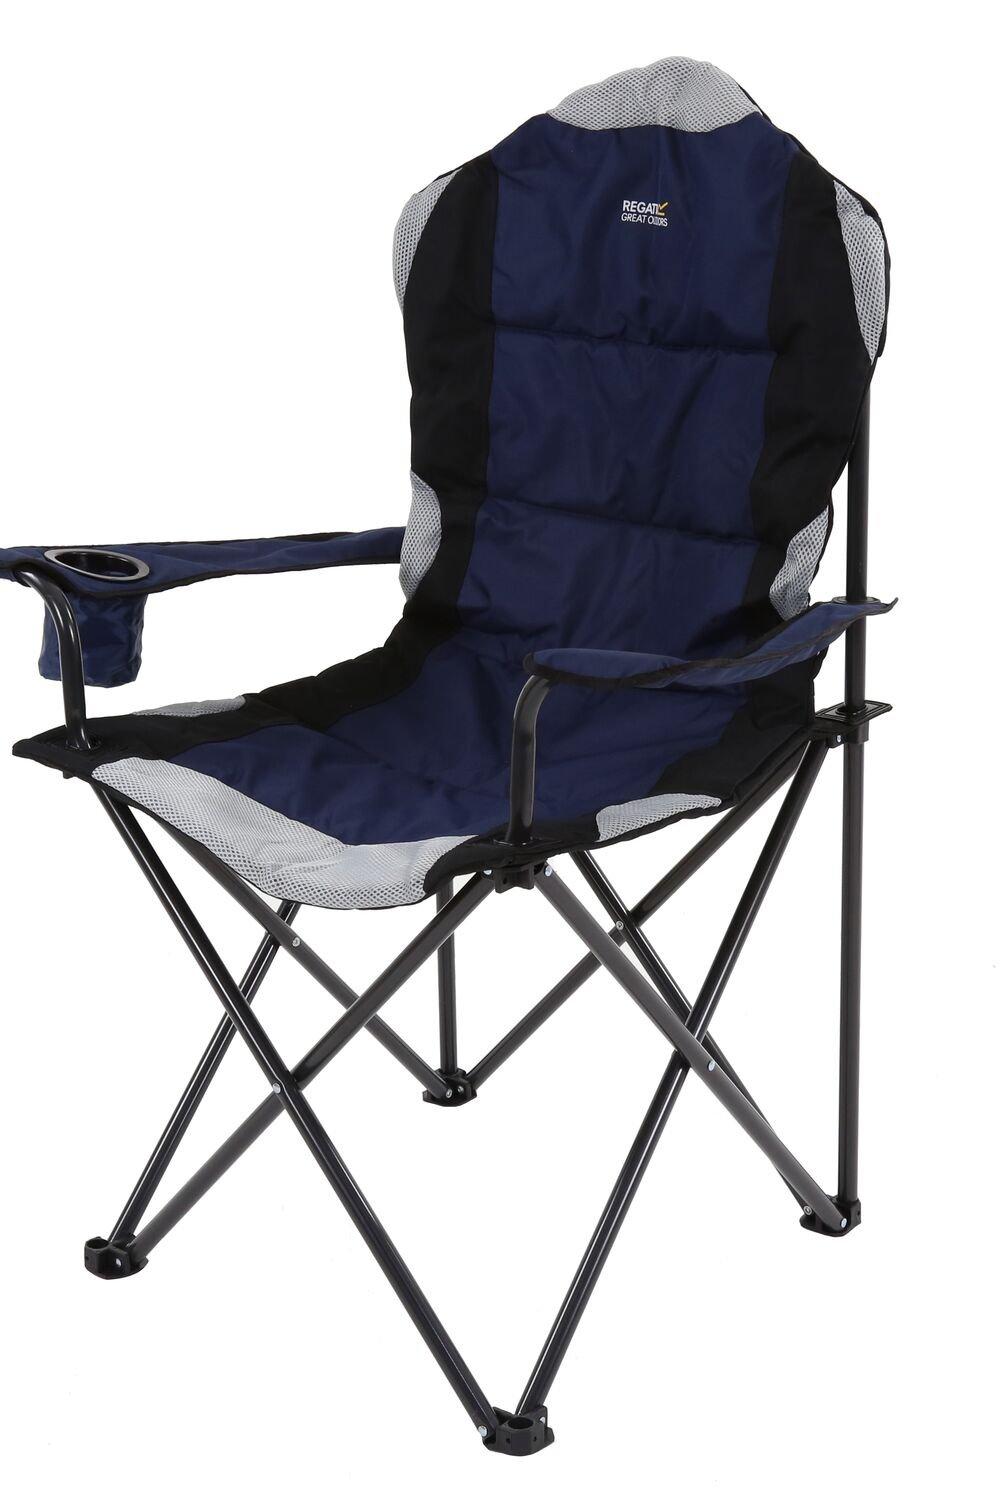 Regatta Kruza Camping Chair-Navy / Black